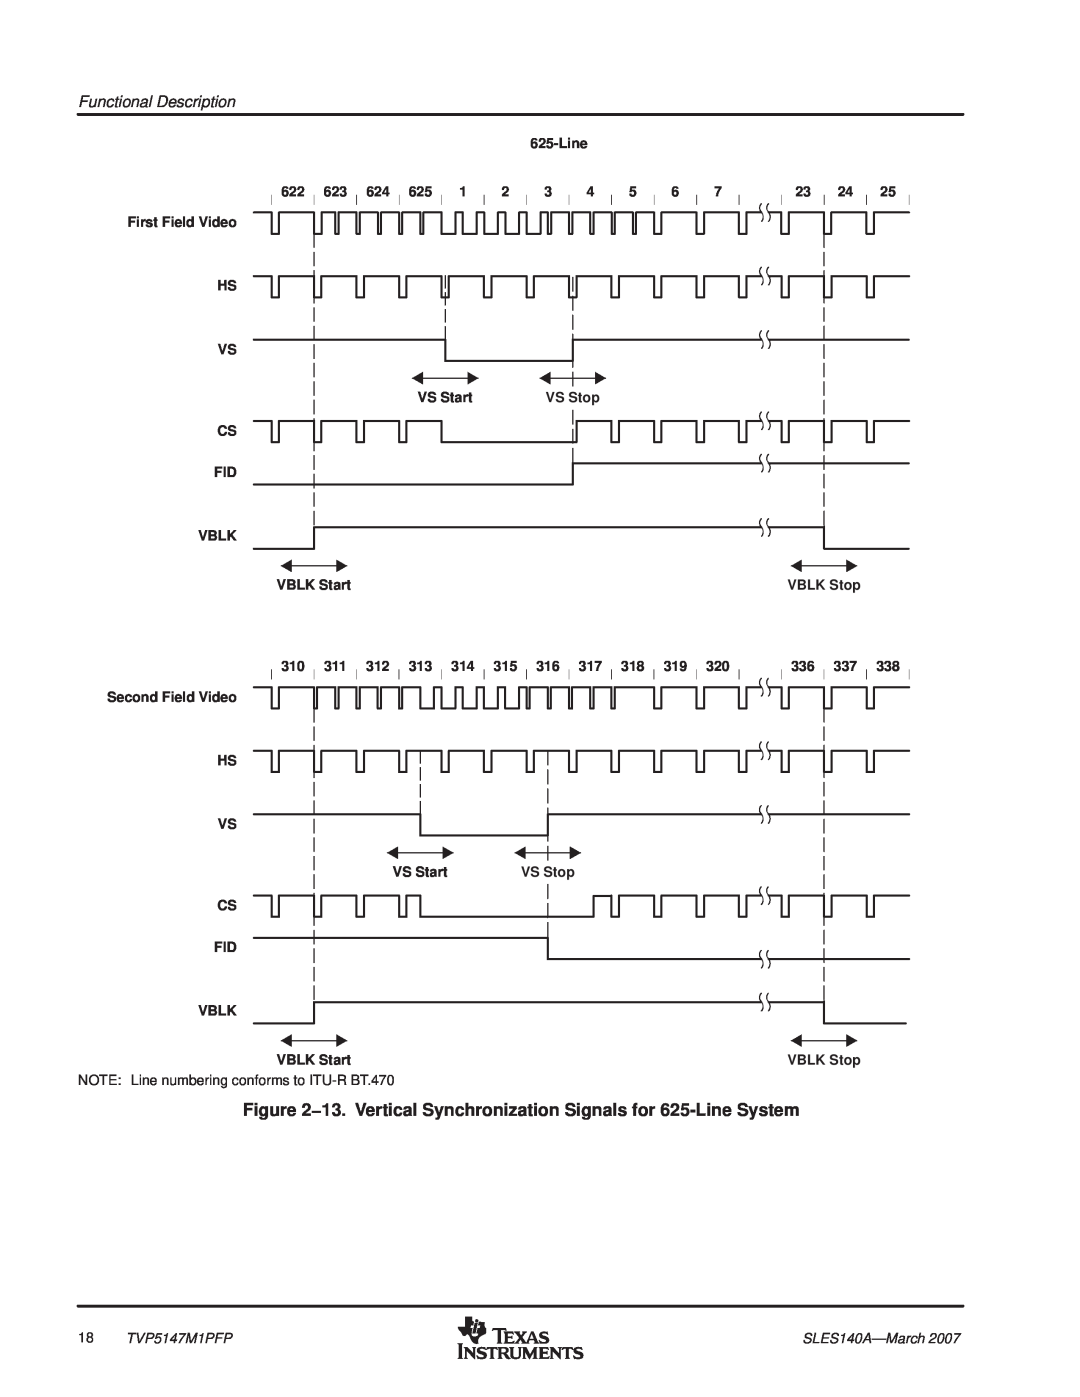 Texas Instruments TVP5147M1PFP manual 13. Vertical Synchronization Signals for 625-Line System, Functional Description 